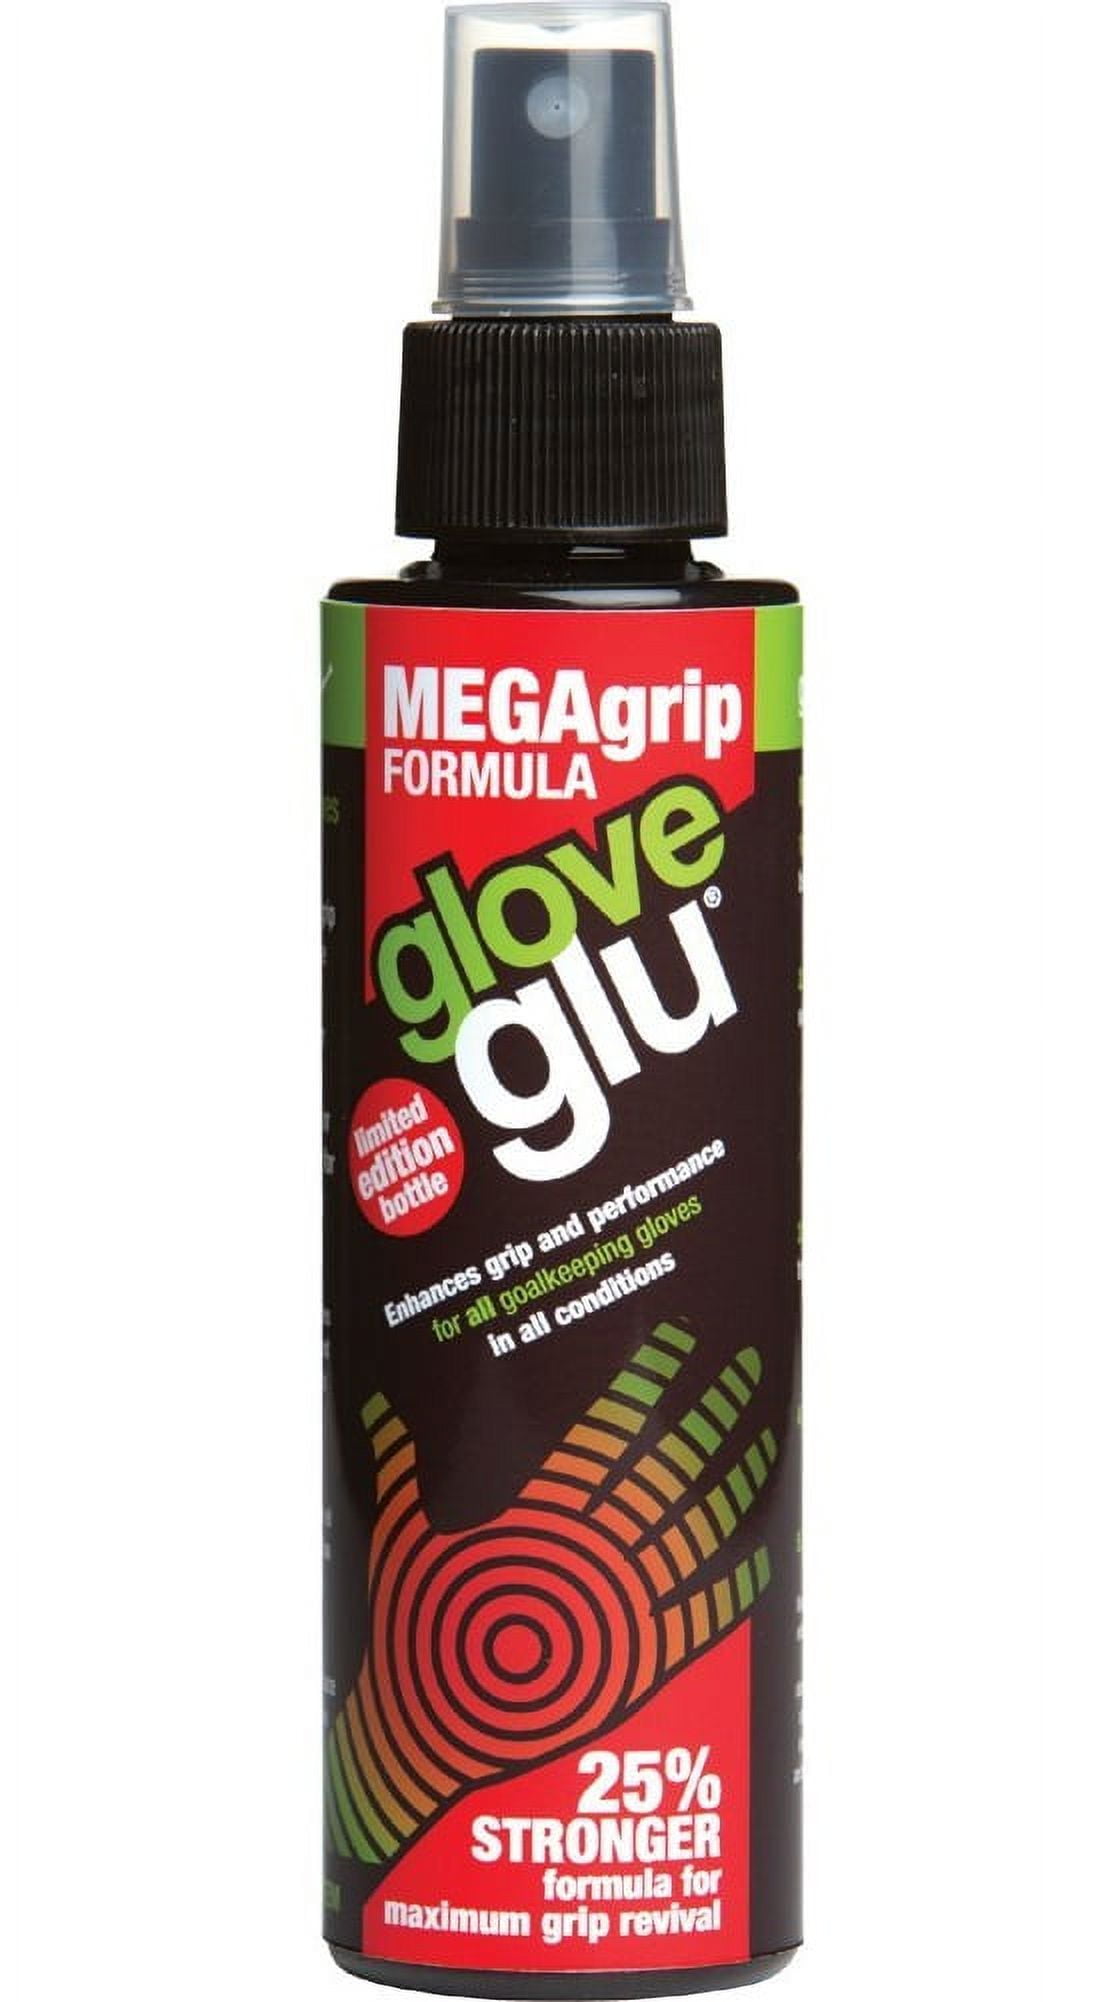 How To Use gloveglu MEGAgrip 